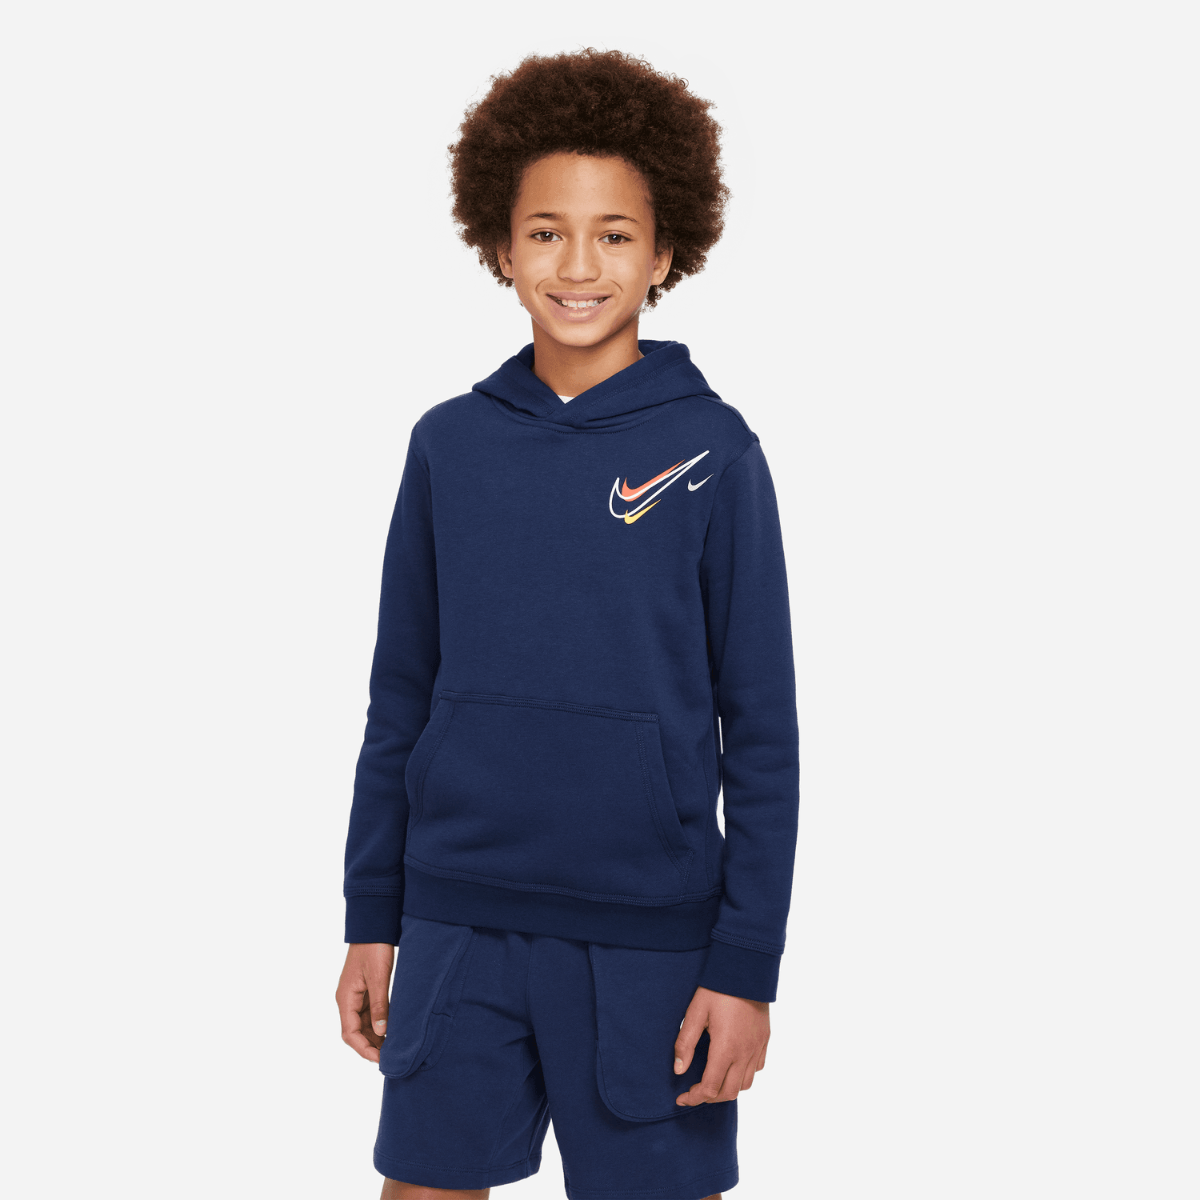 Sweat à Capuche Nike Tech Fleece Junior - Bleu Marine